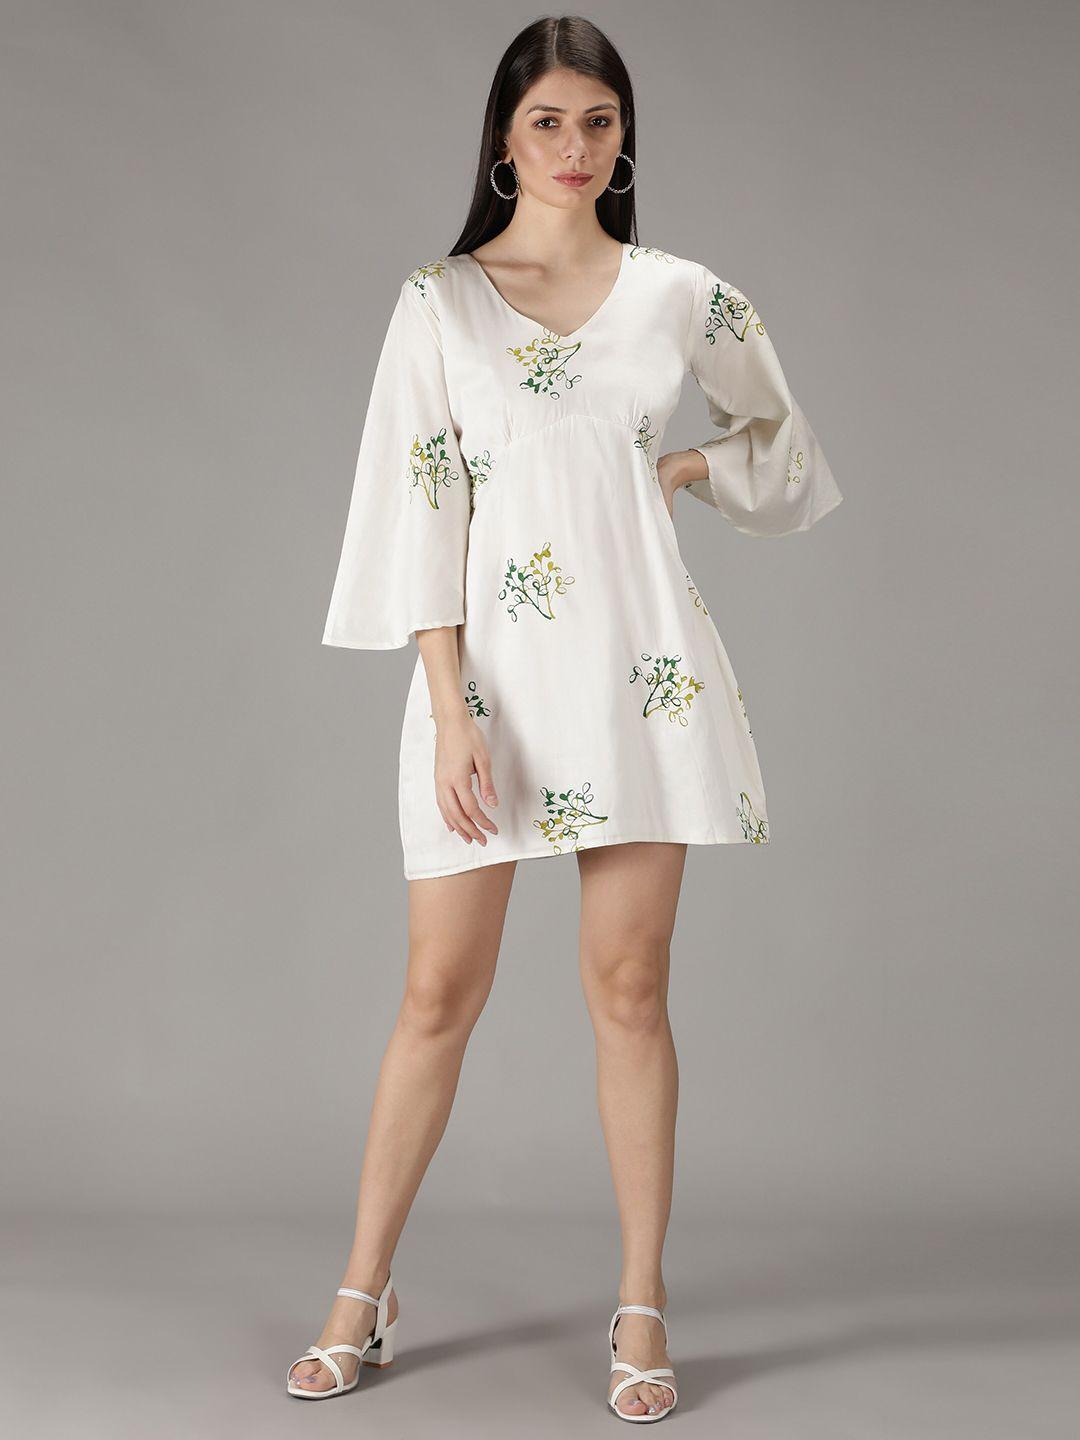 sajke-off-white-&-green-floral-a-line-mini-dress